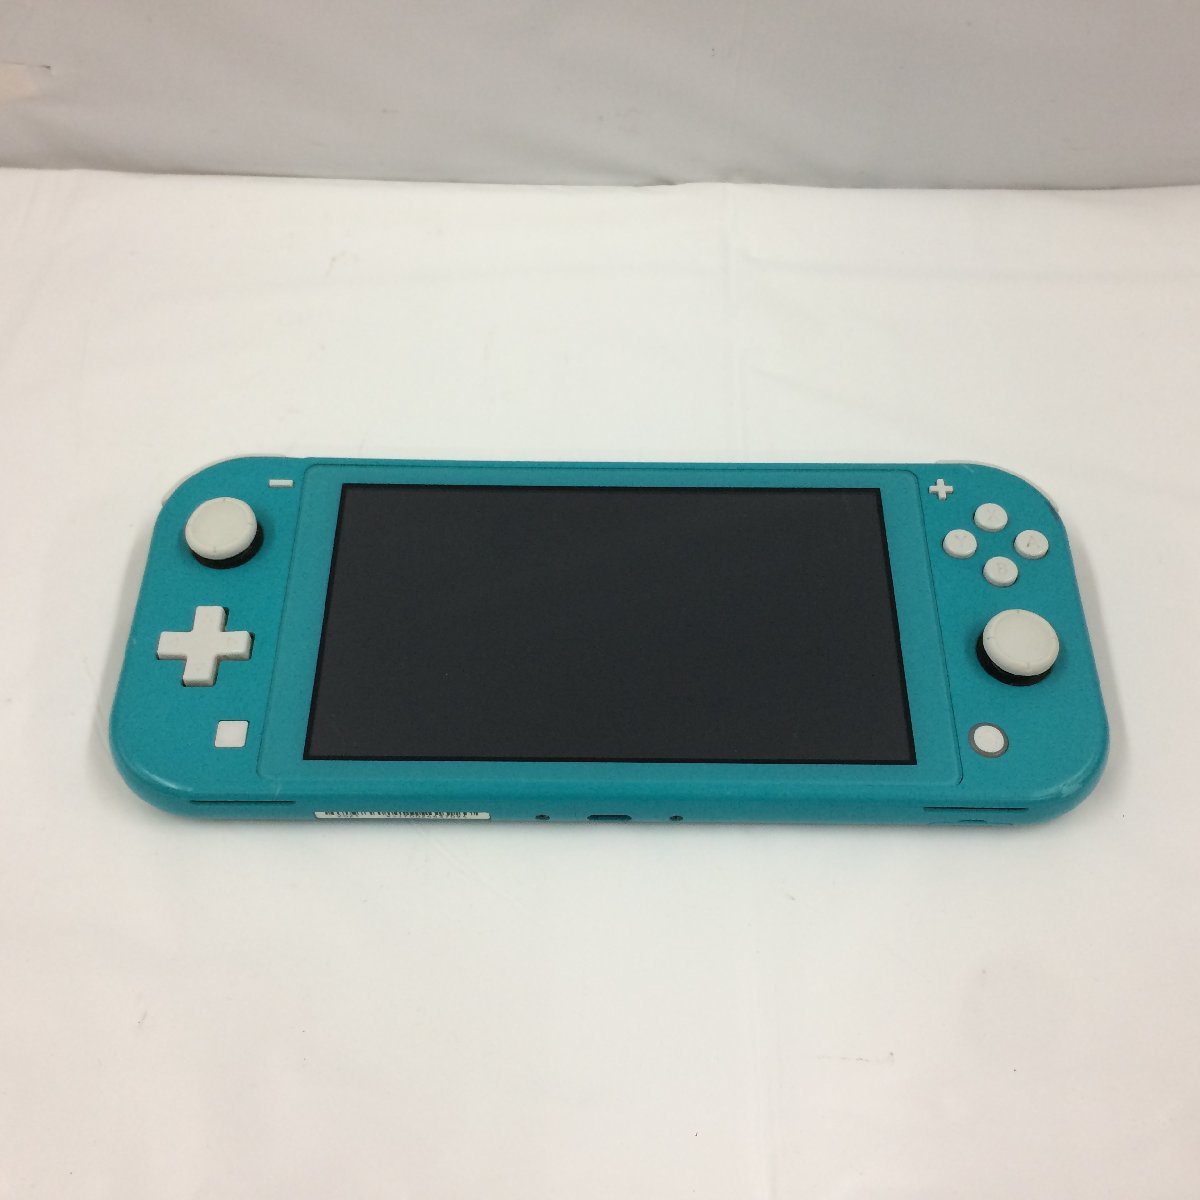 f090*80 【ジャンク】 Nintendo Switch Lite 本体のみ ターコイズブルー 電源不良